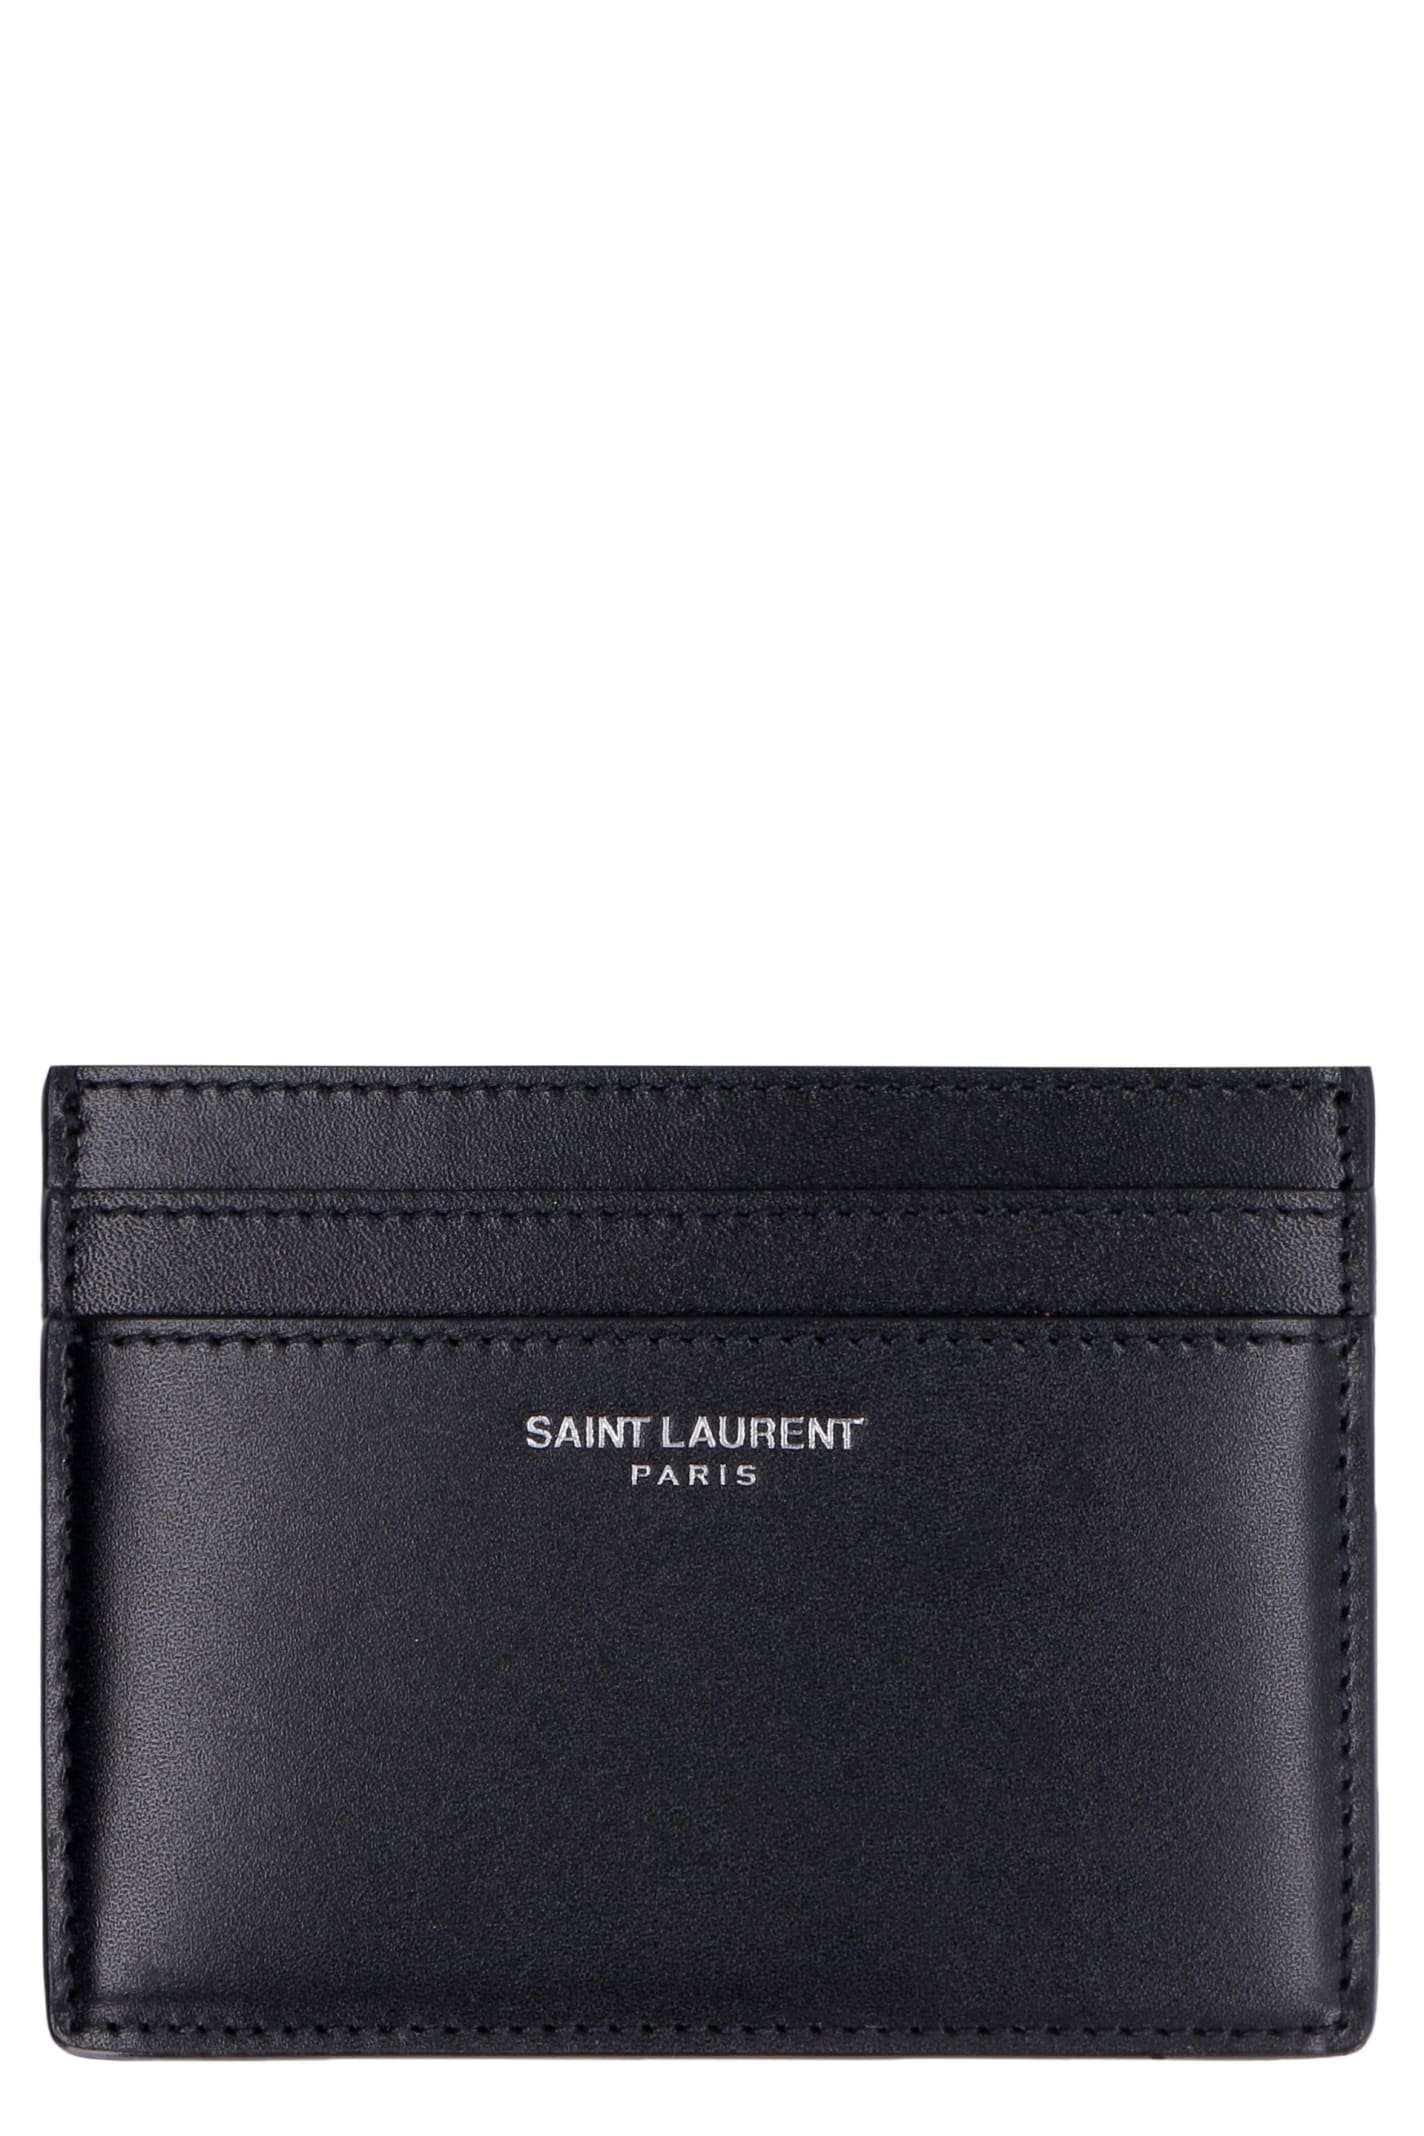 Saint Laurent Smooth Leather Card Holder